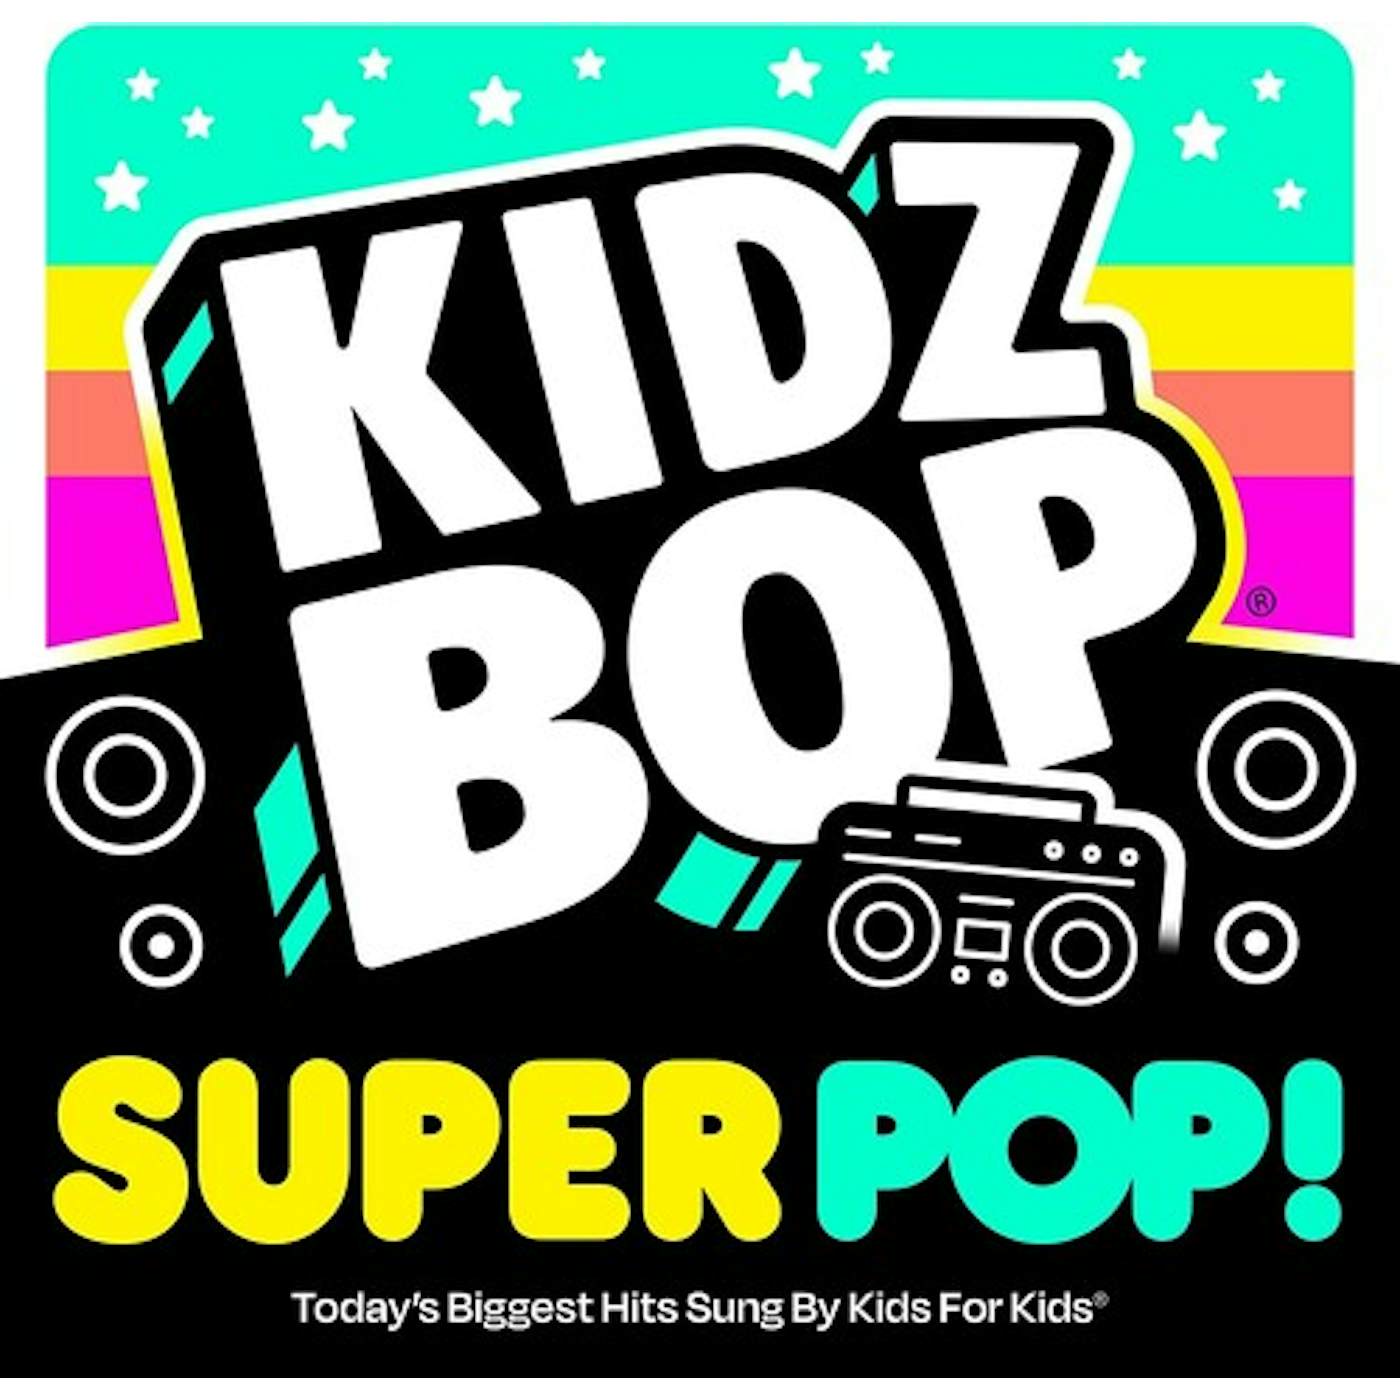 KIDZ BOP SUPER POP CD